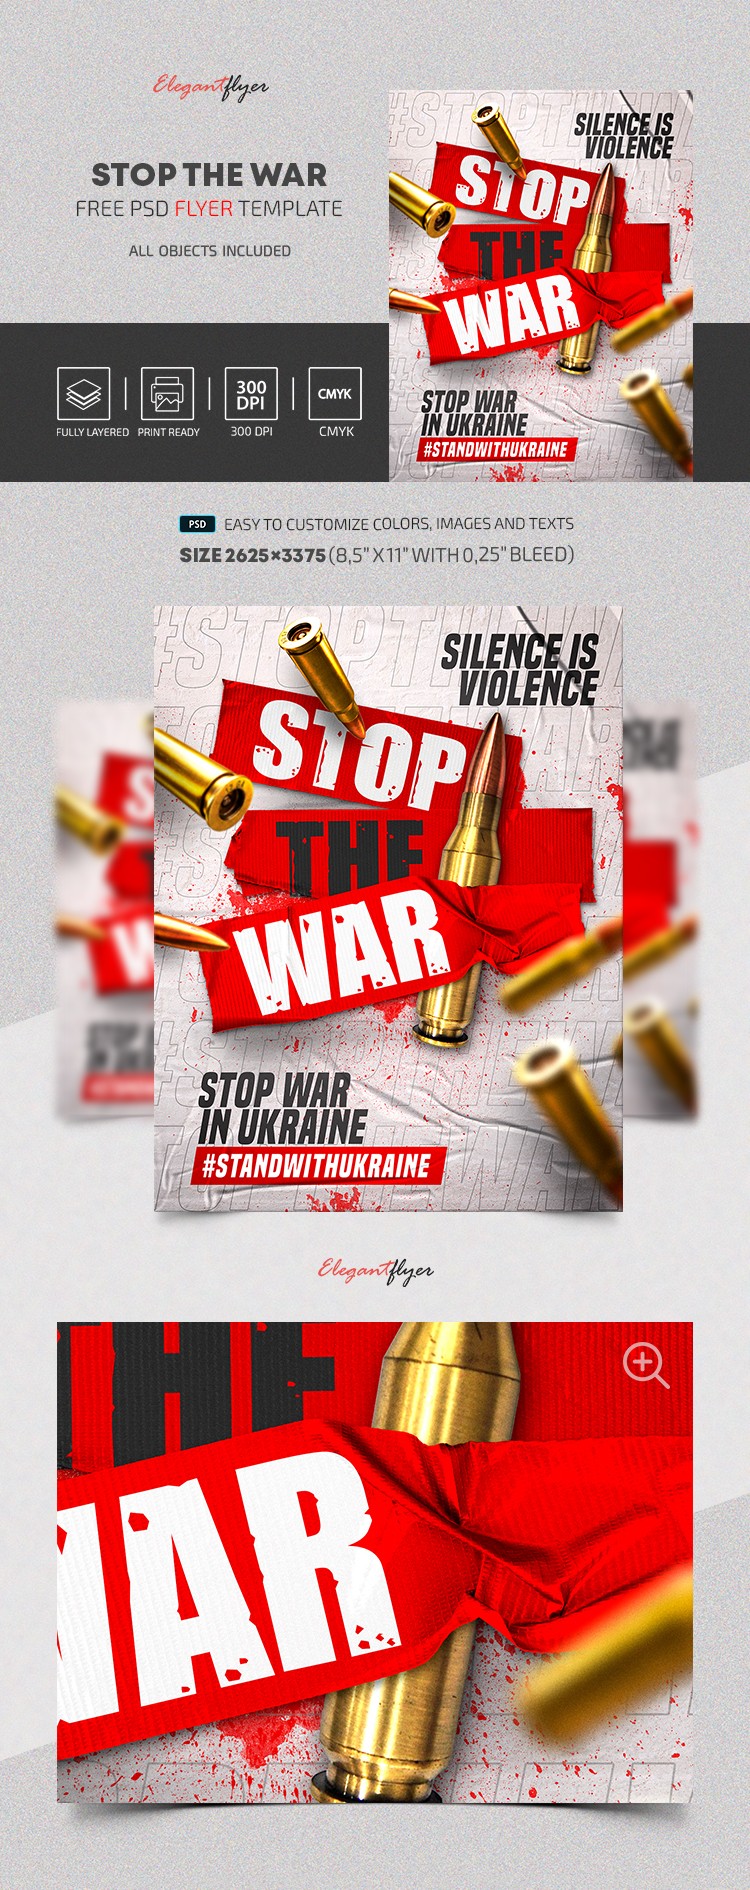 Stop the War Flyer by ElegantFlyer